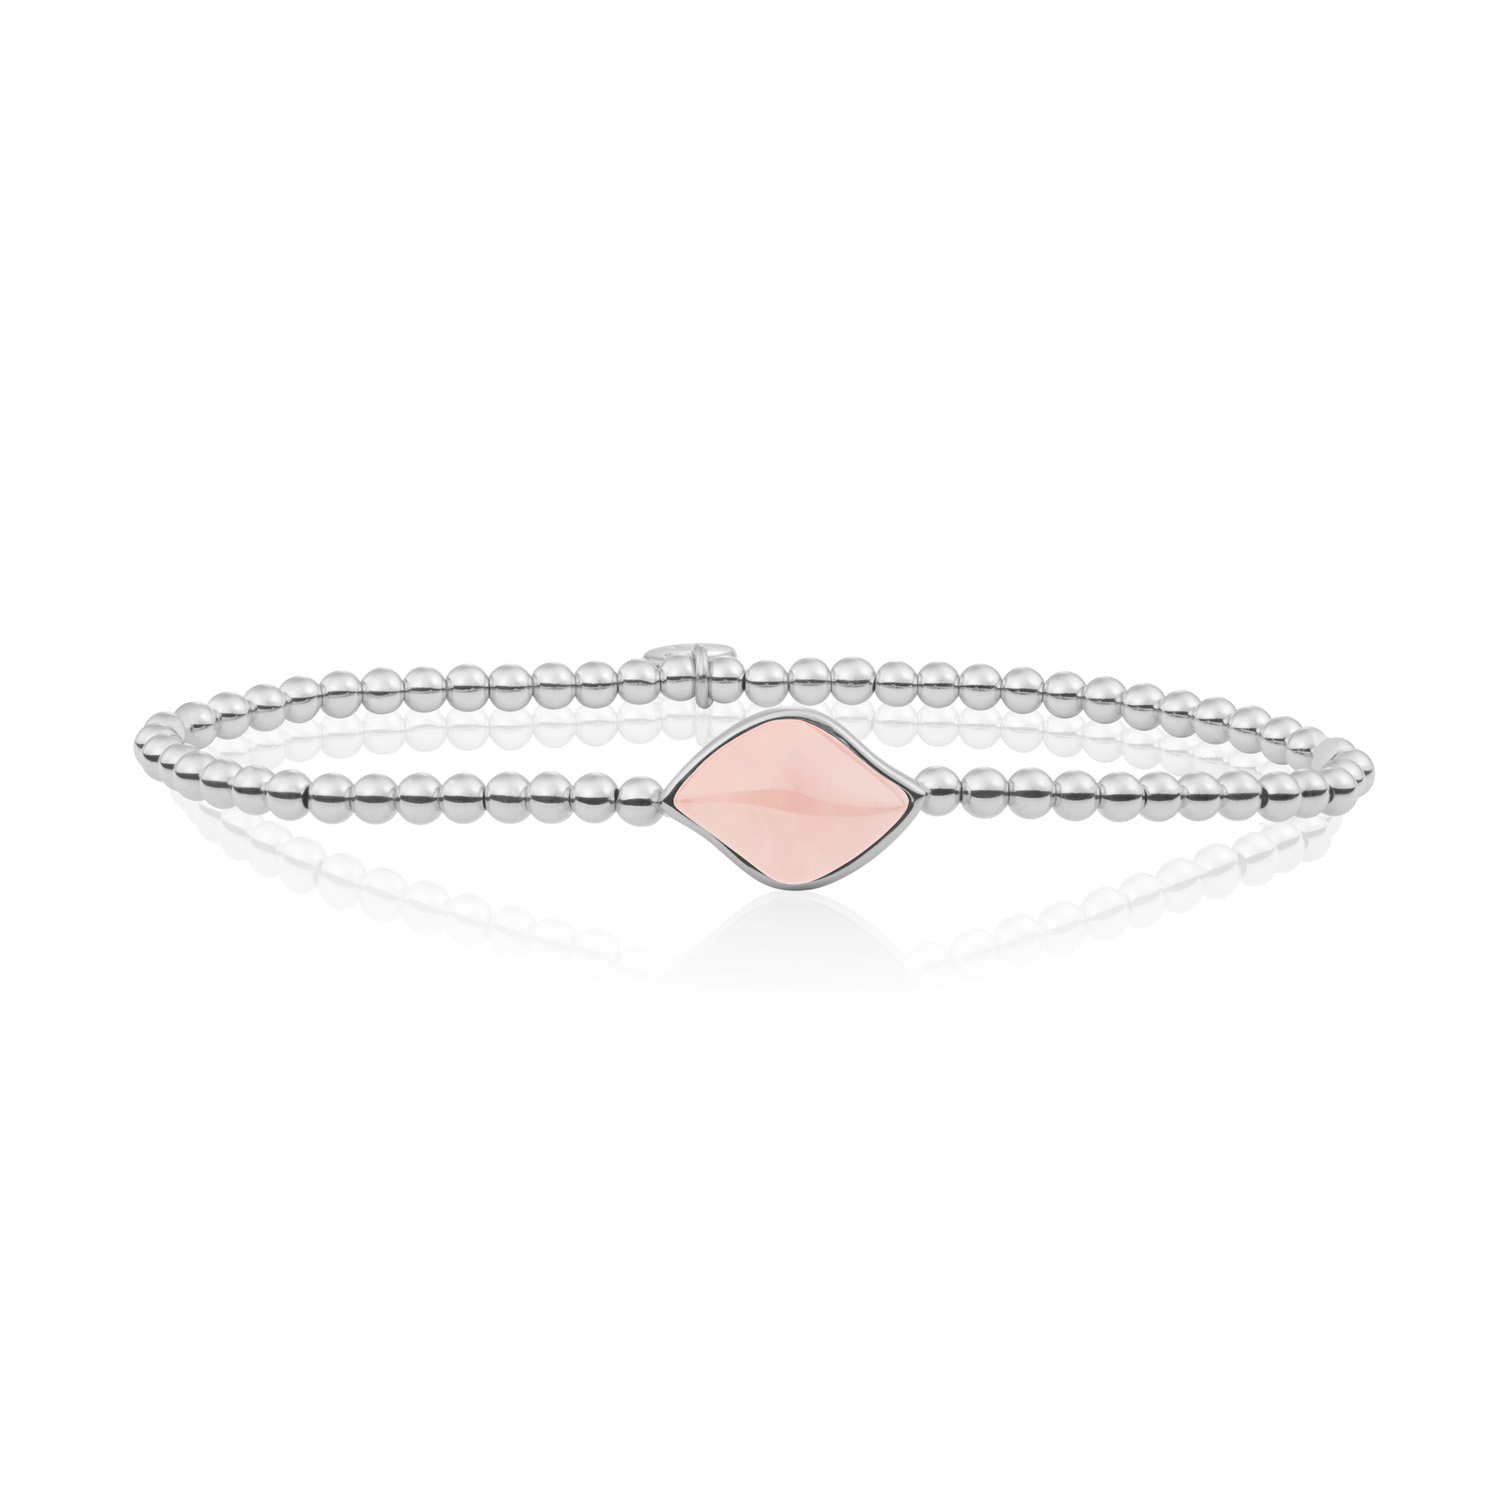 Sparkling Jewels Blossom zilveren armband met roze kwarts